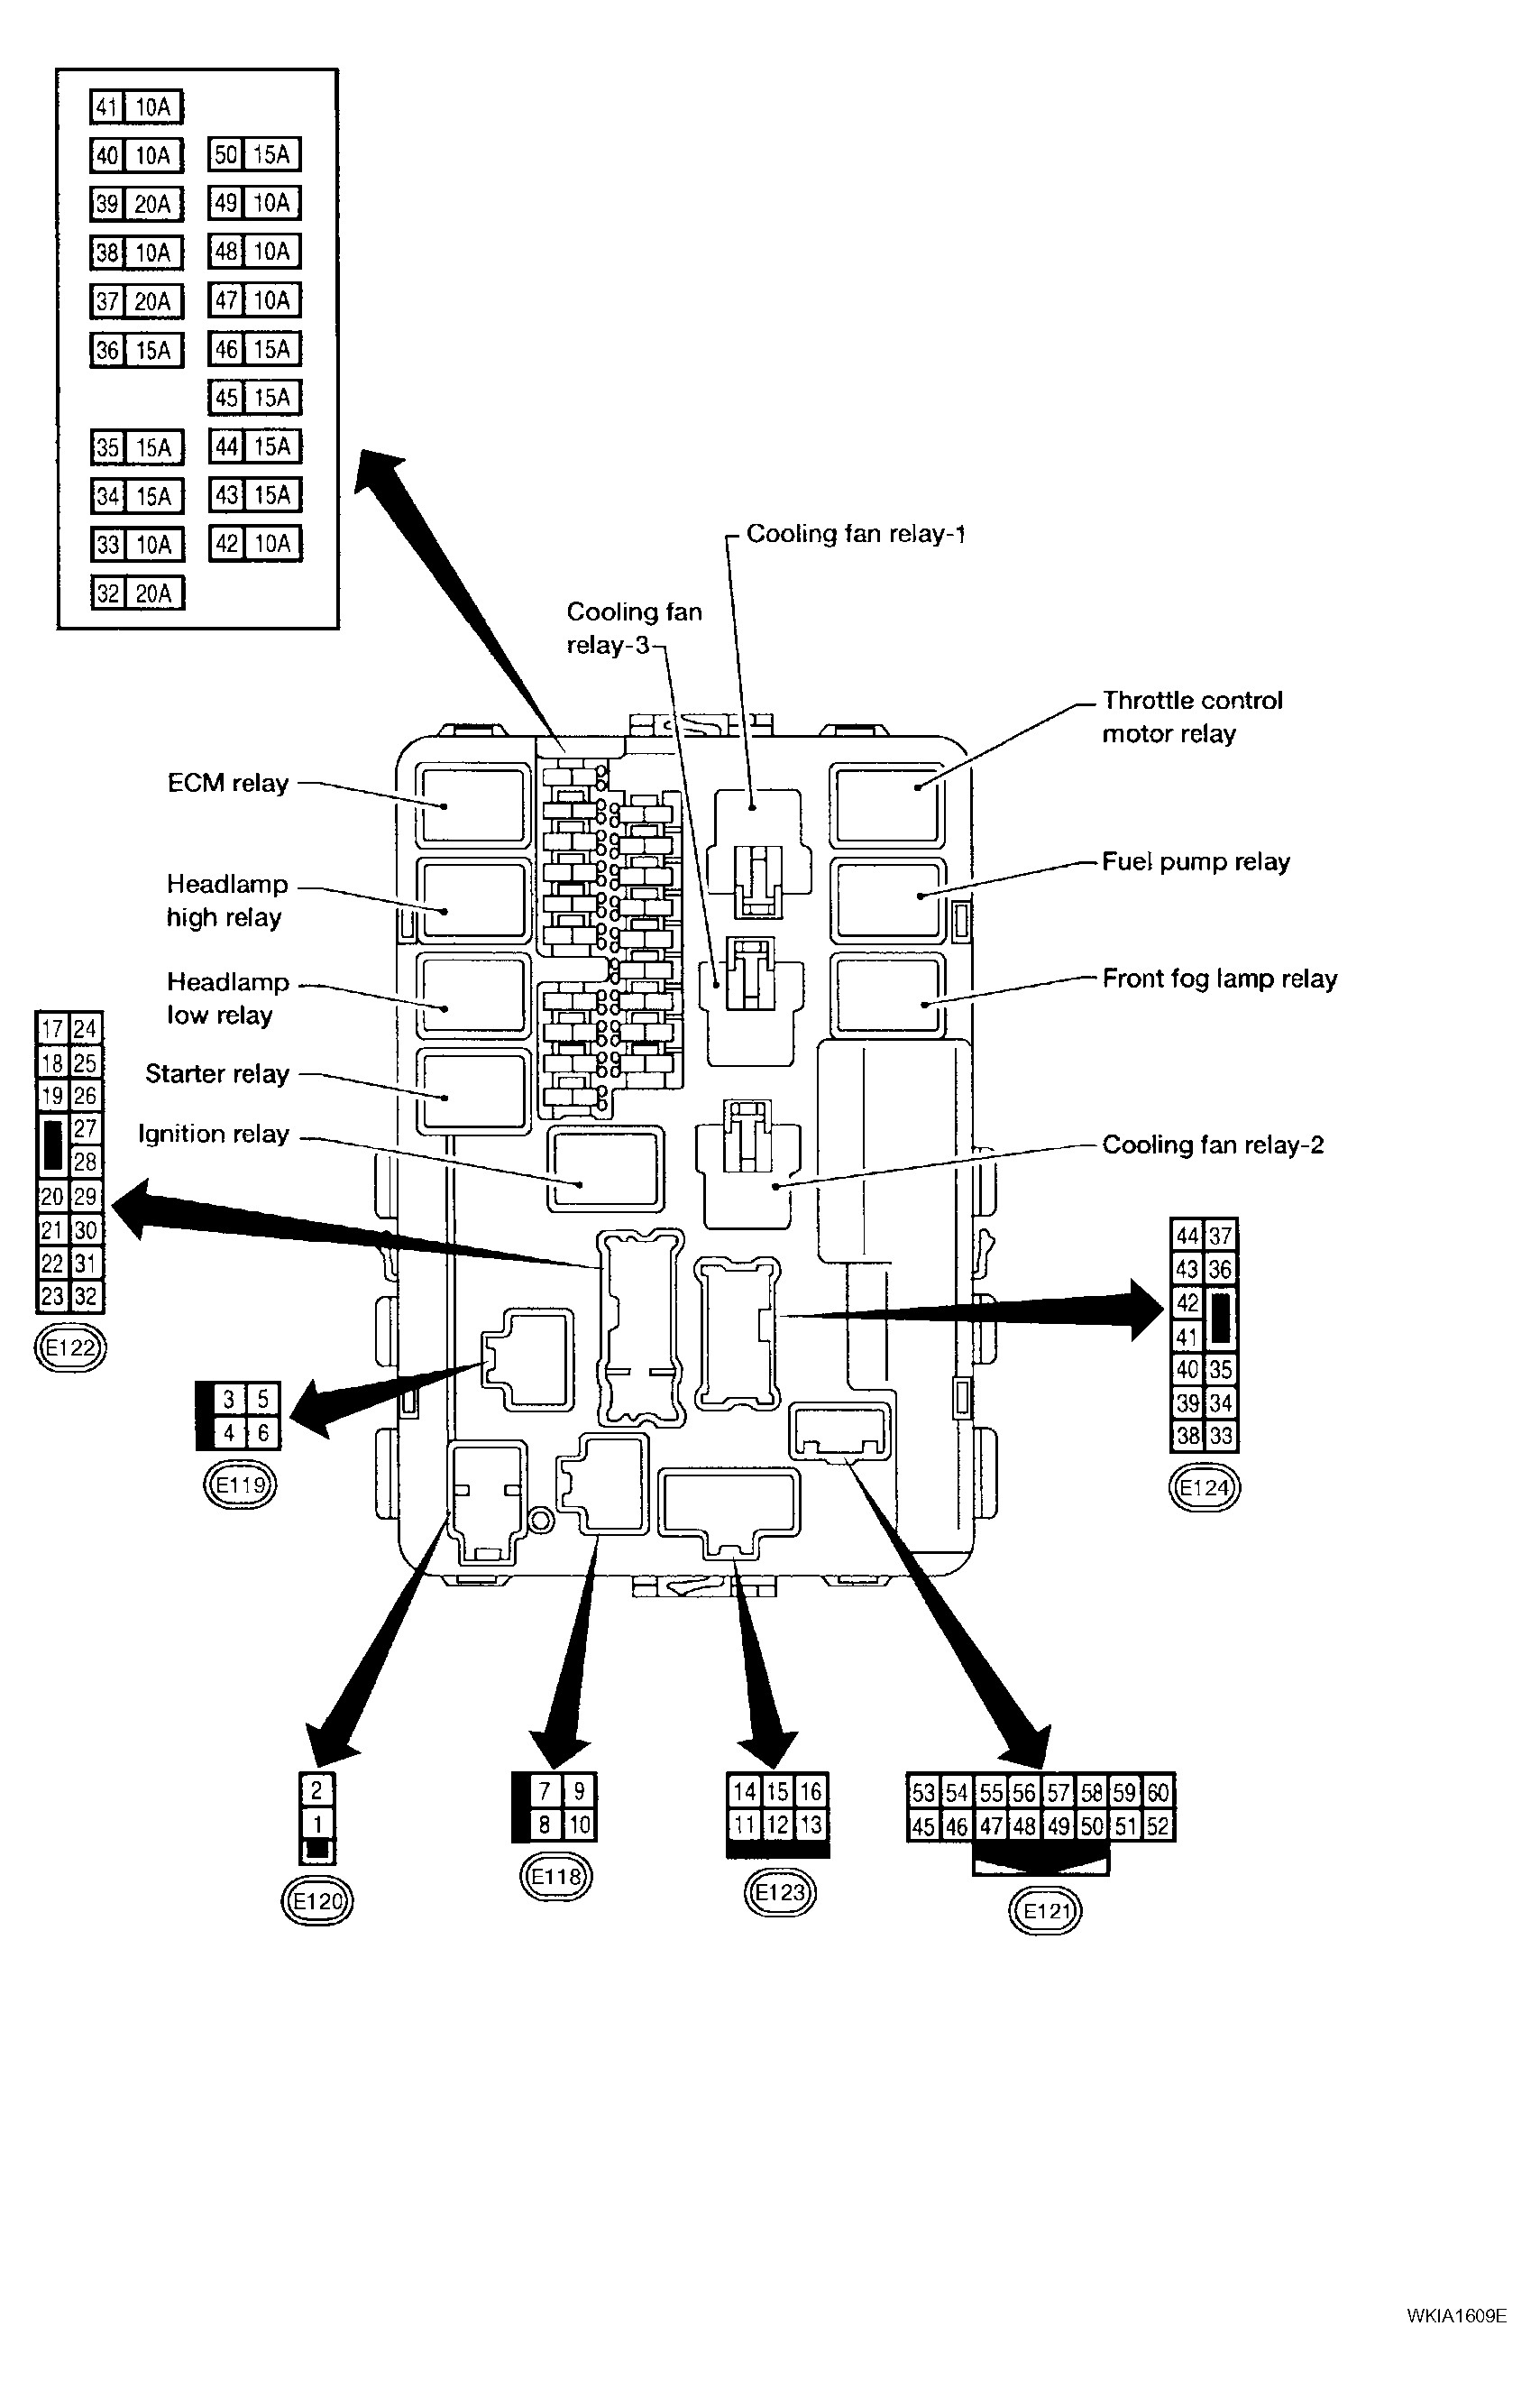 1998 Nissan Maxima Wiring Diagram from detoxicrecenze.com